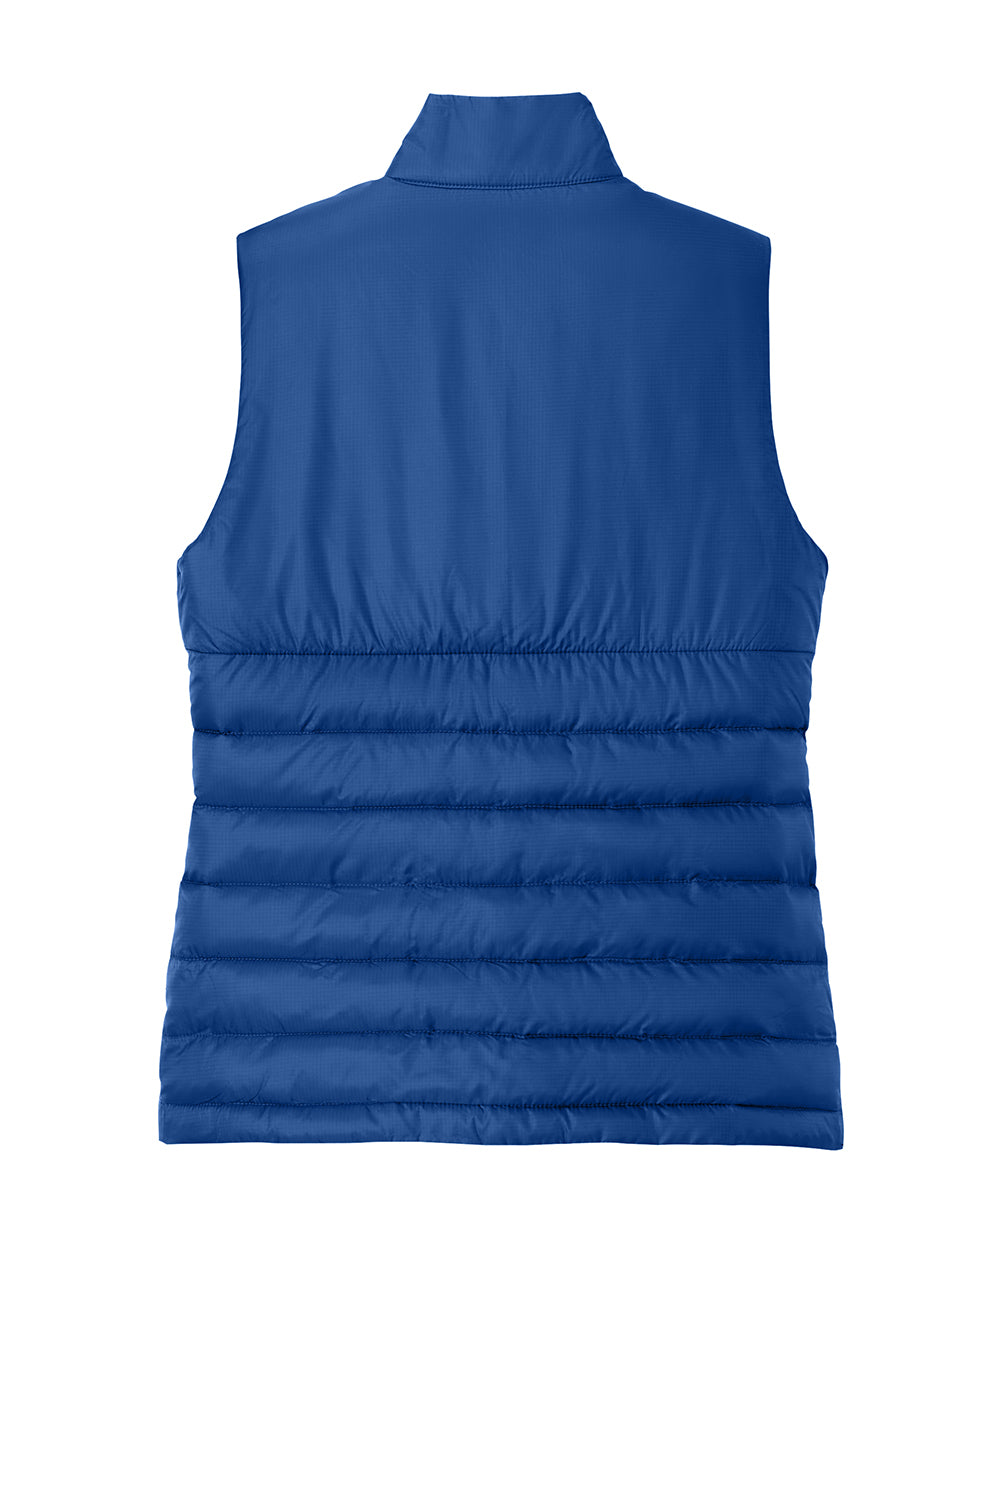 Eddie Bauer EB513 Womens Water Resistant Quilted Full Zip Vest Cobalt Blue Flat Back